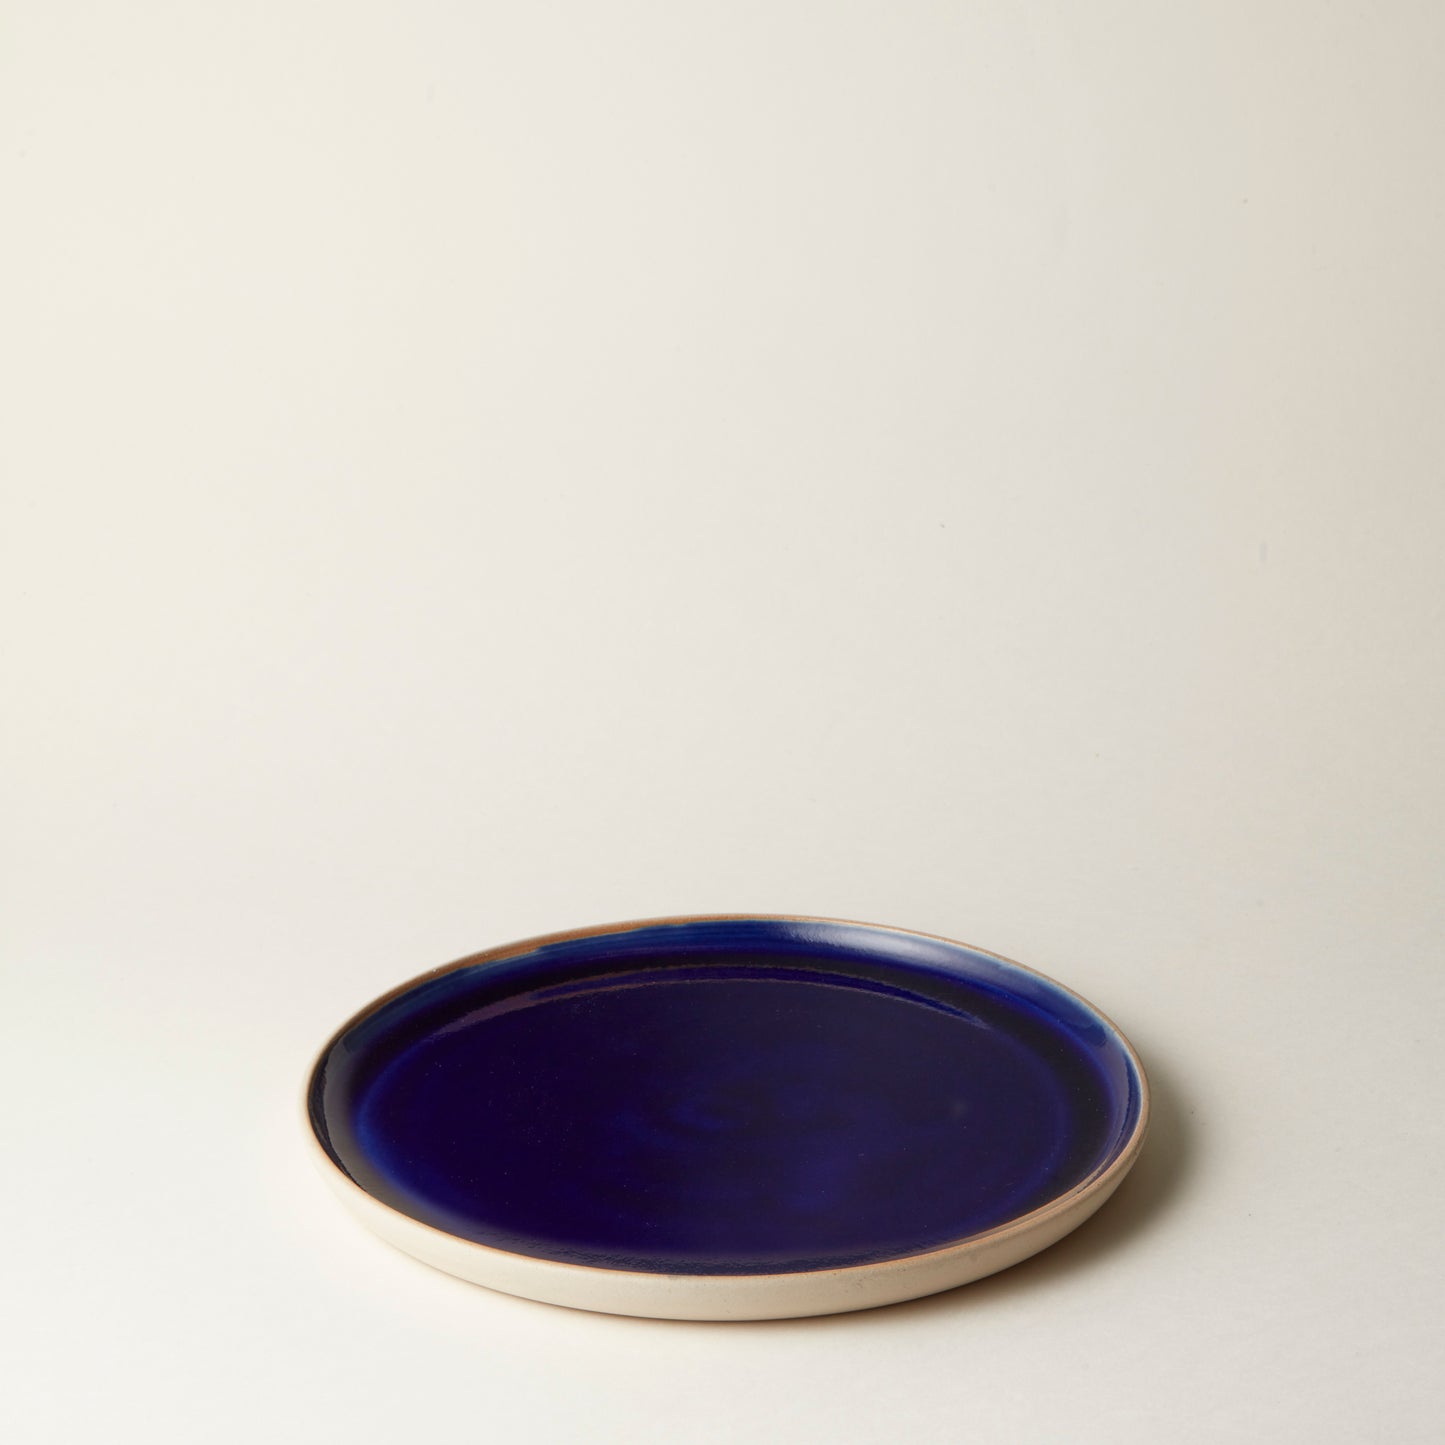 Large blue ceramic plate